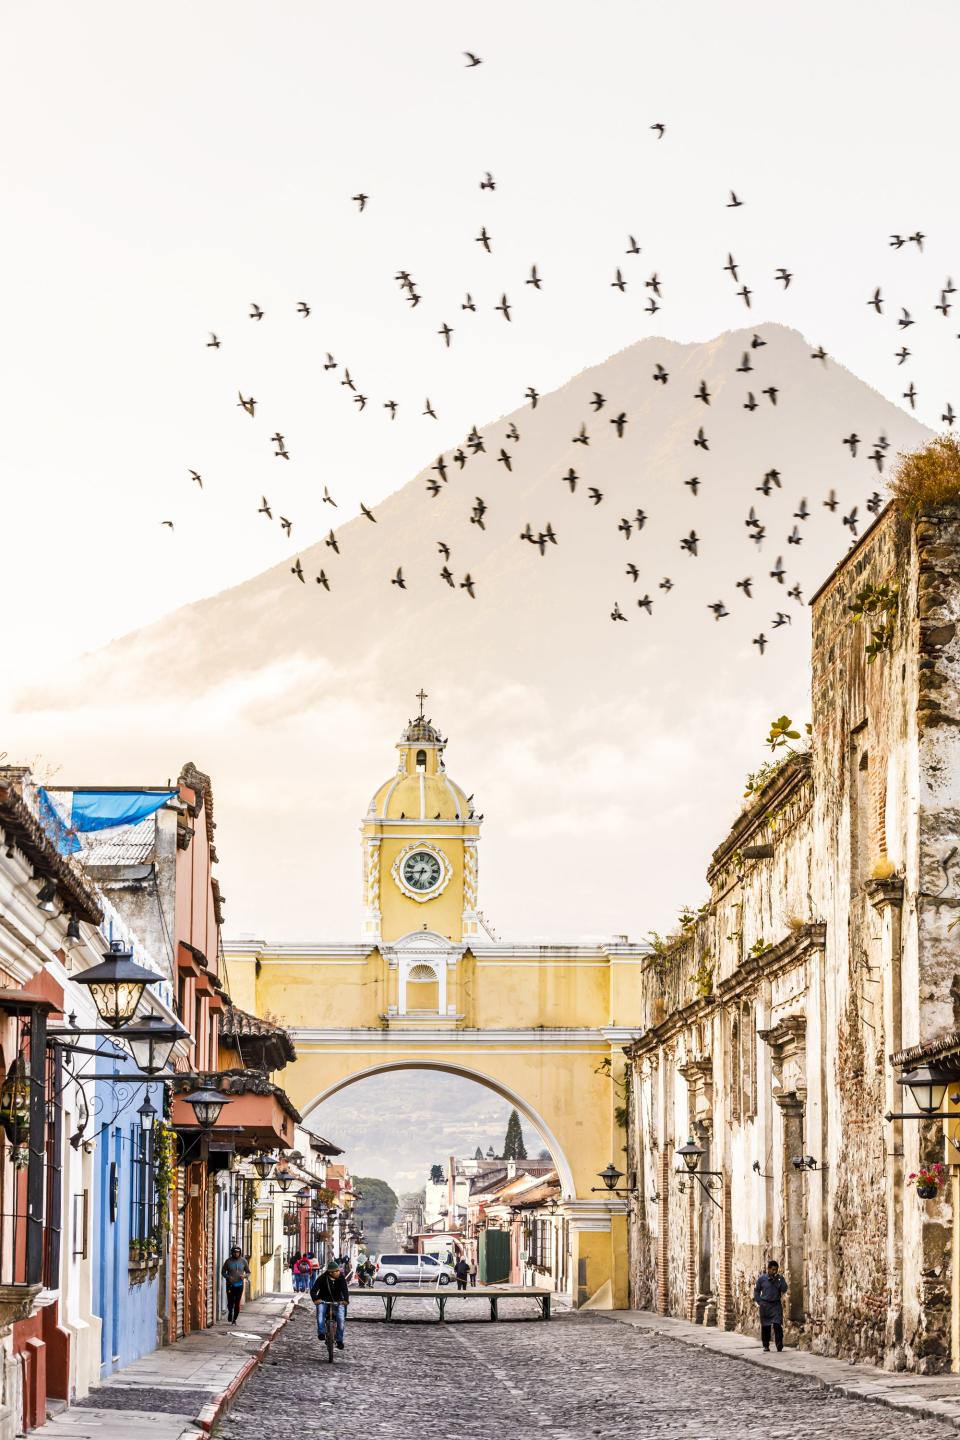 The Santa Catalina Arch in Antigua, Guatemala